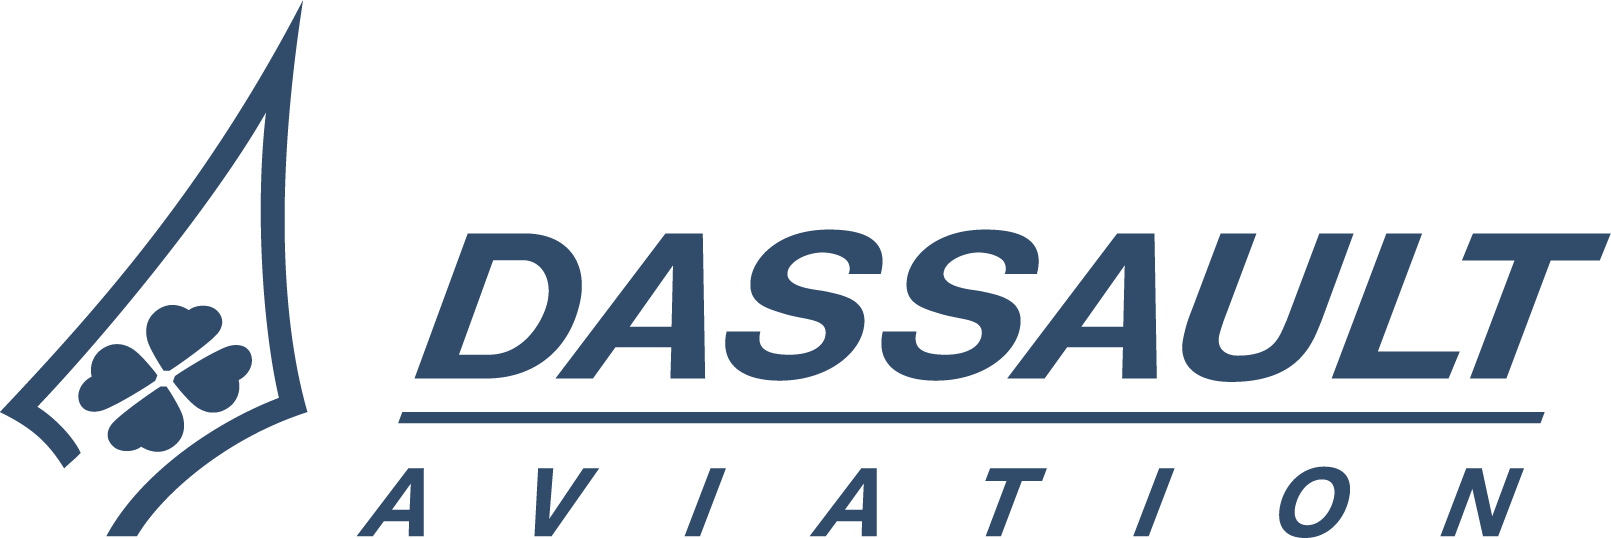 Dassault Aviation Logo png